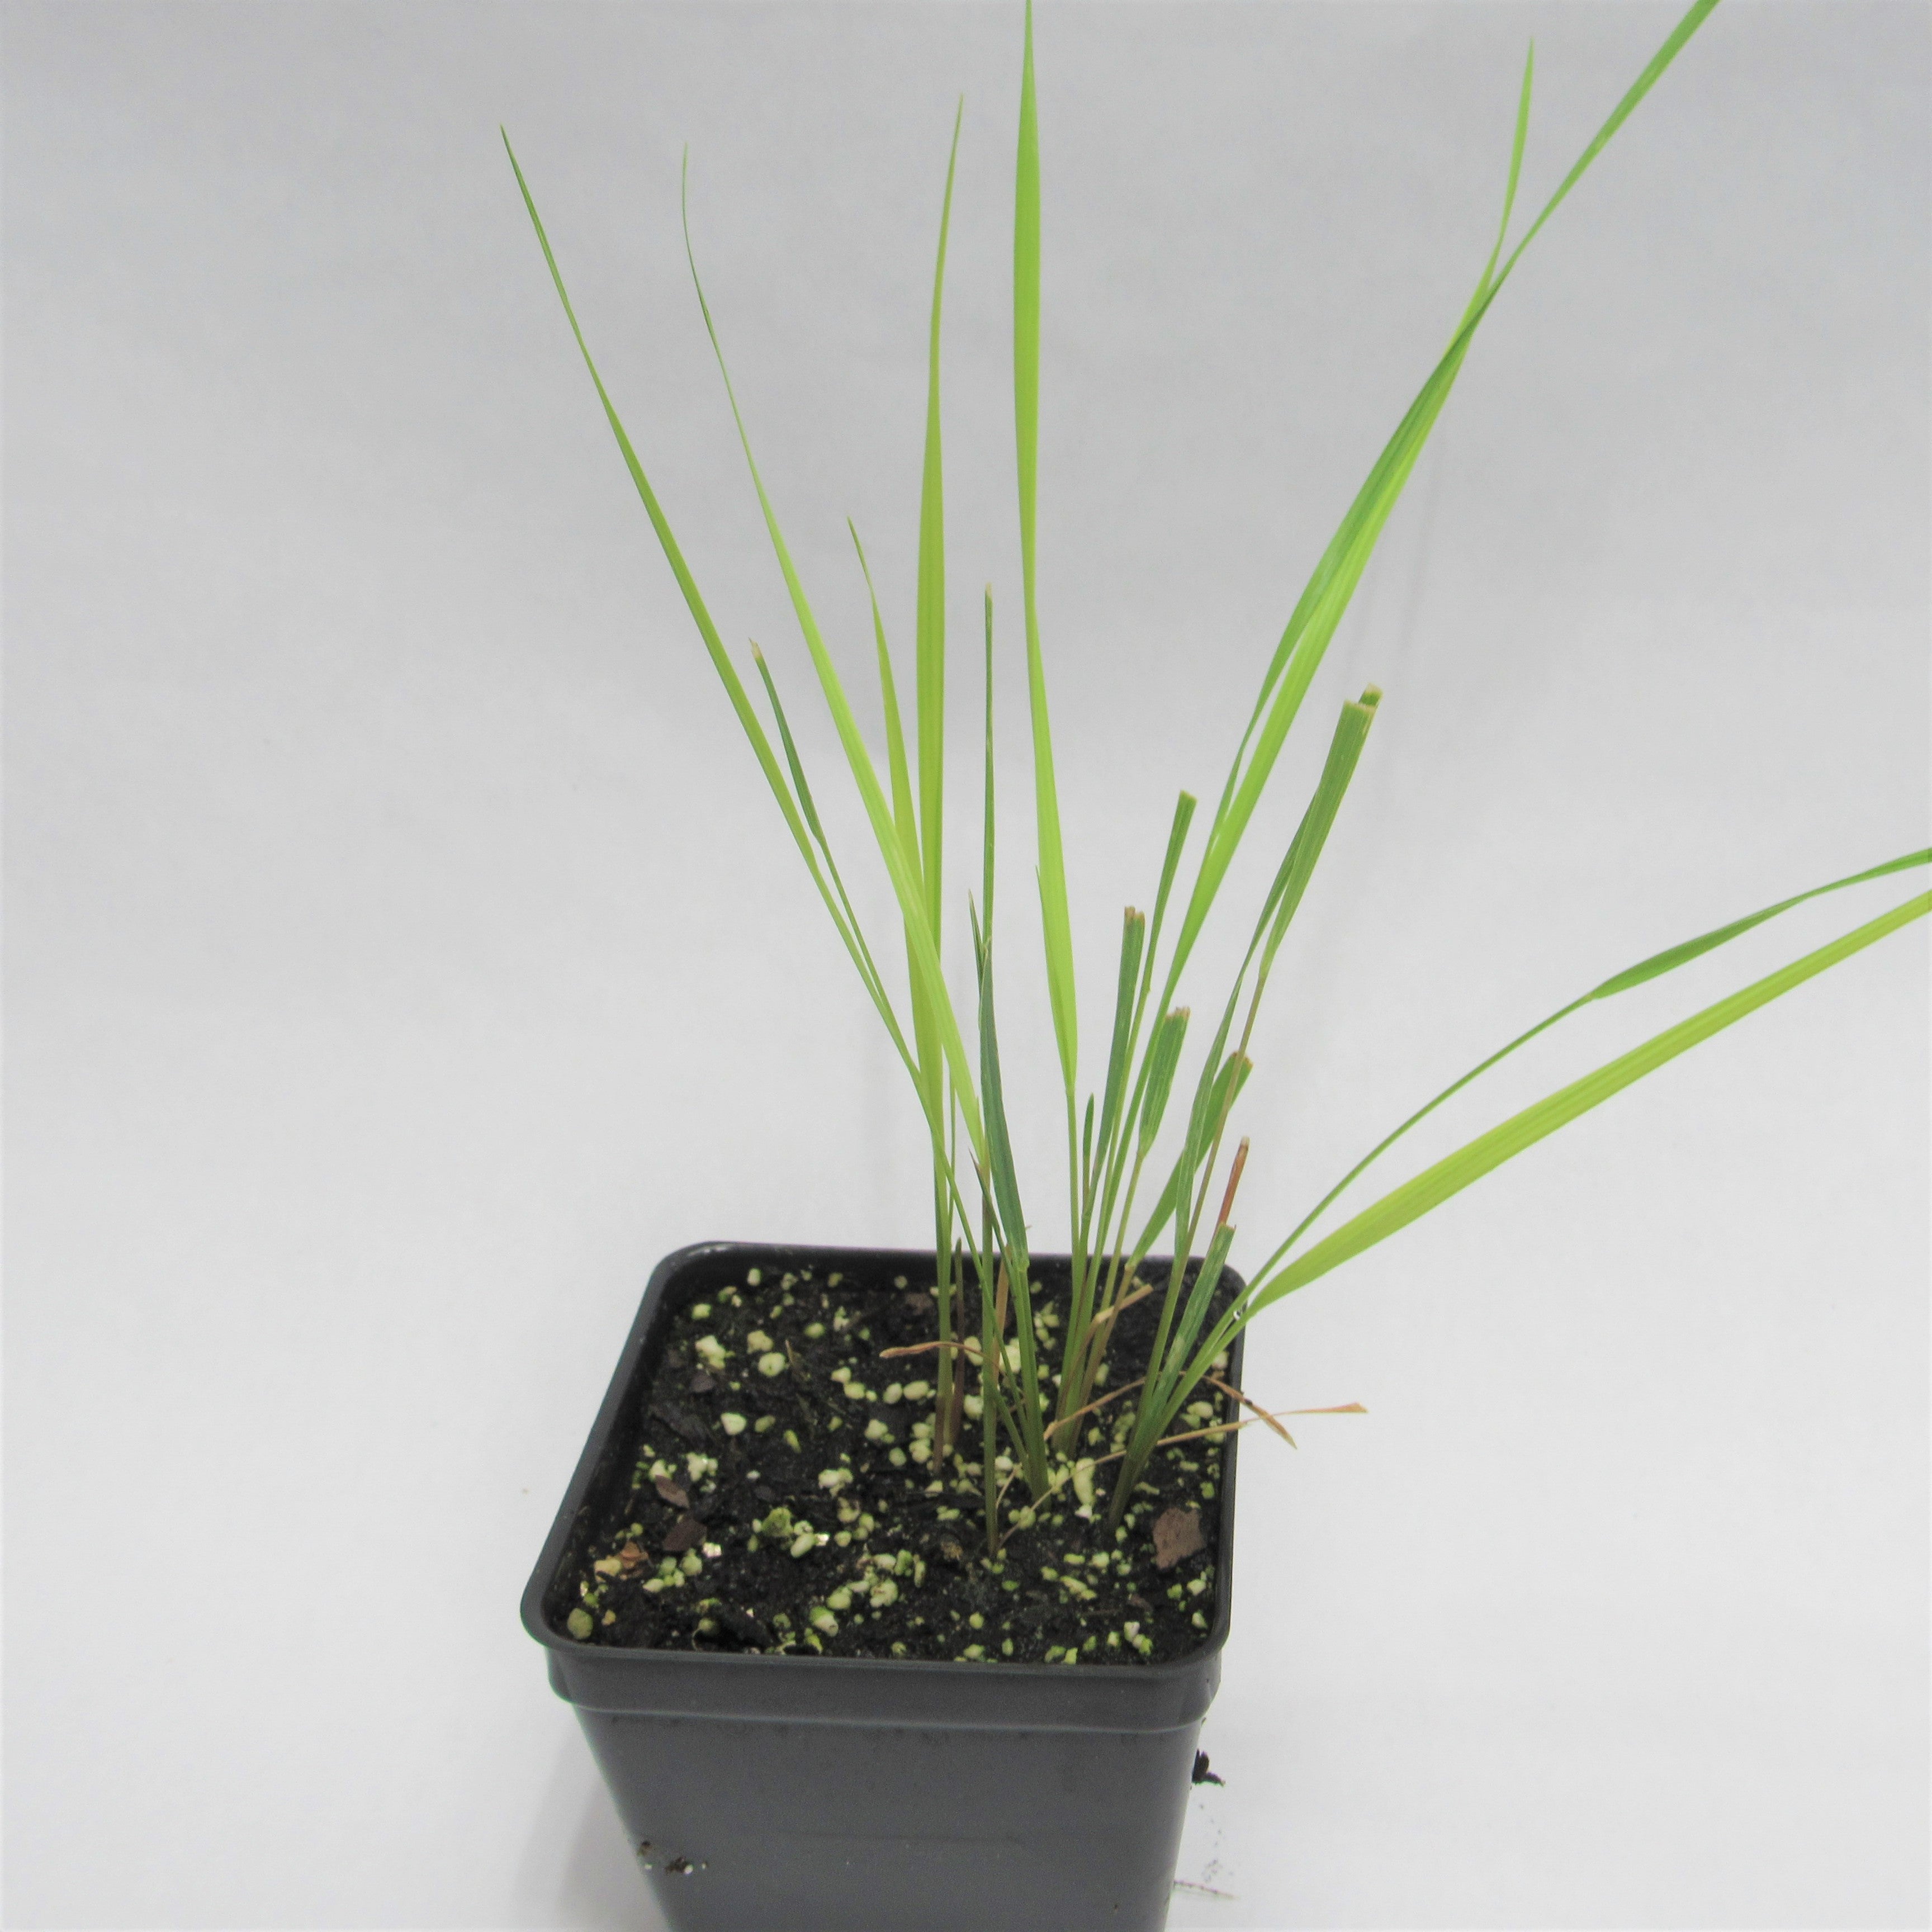 Grass, Sweetgrass (Hierochloe odorata), packet of 20 seeds